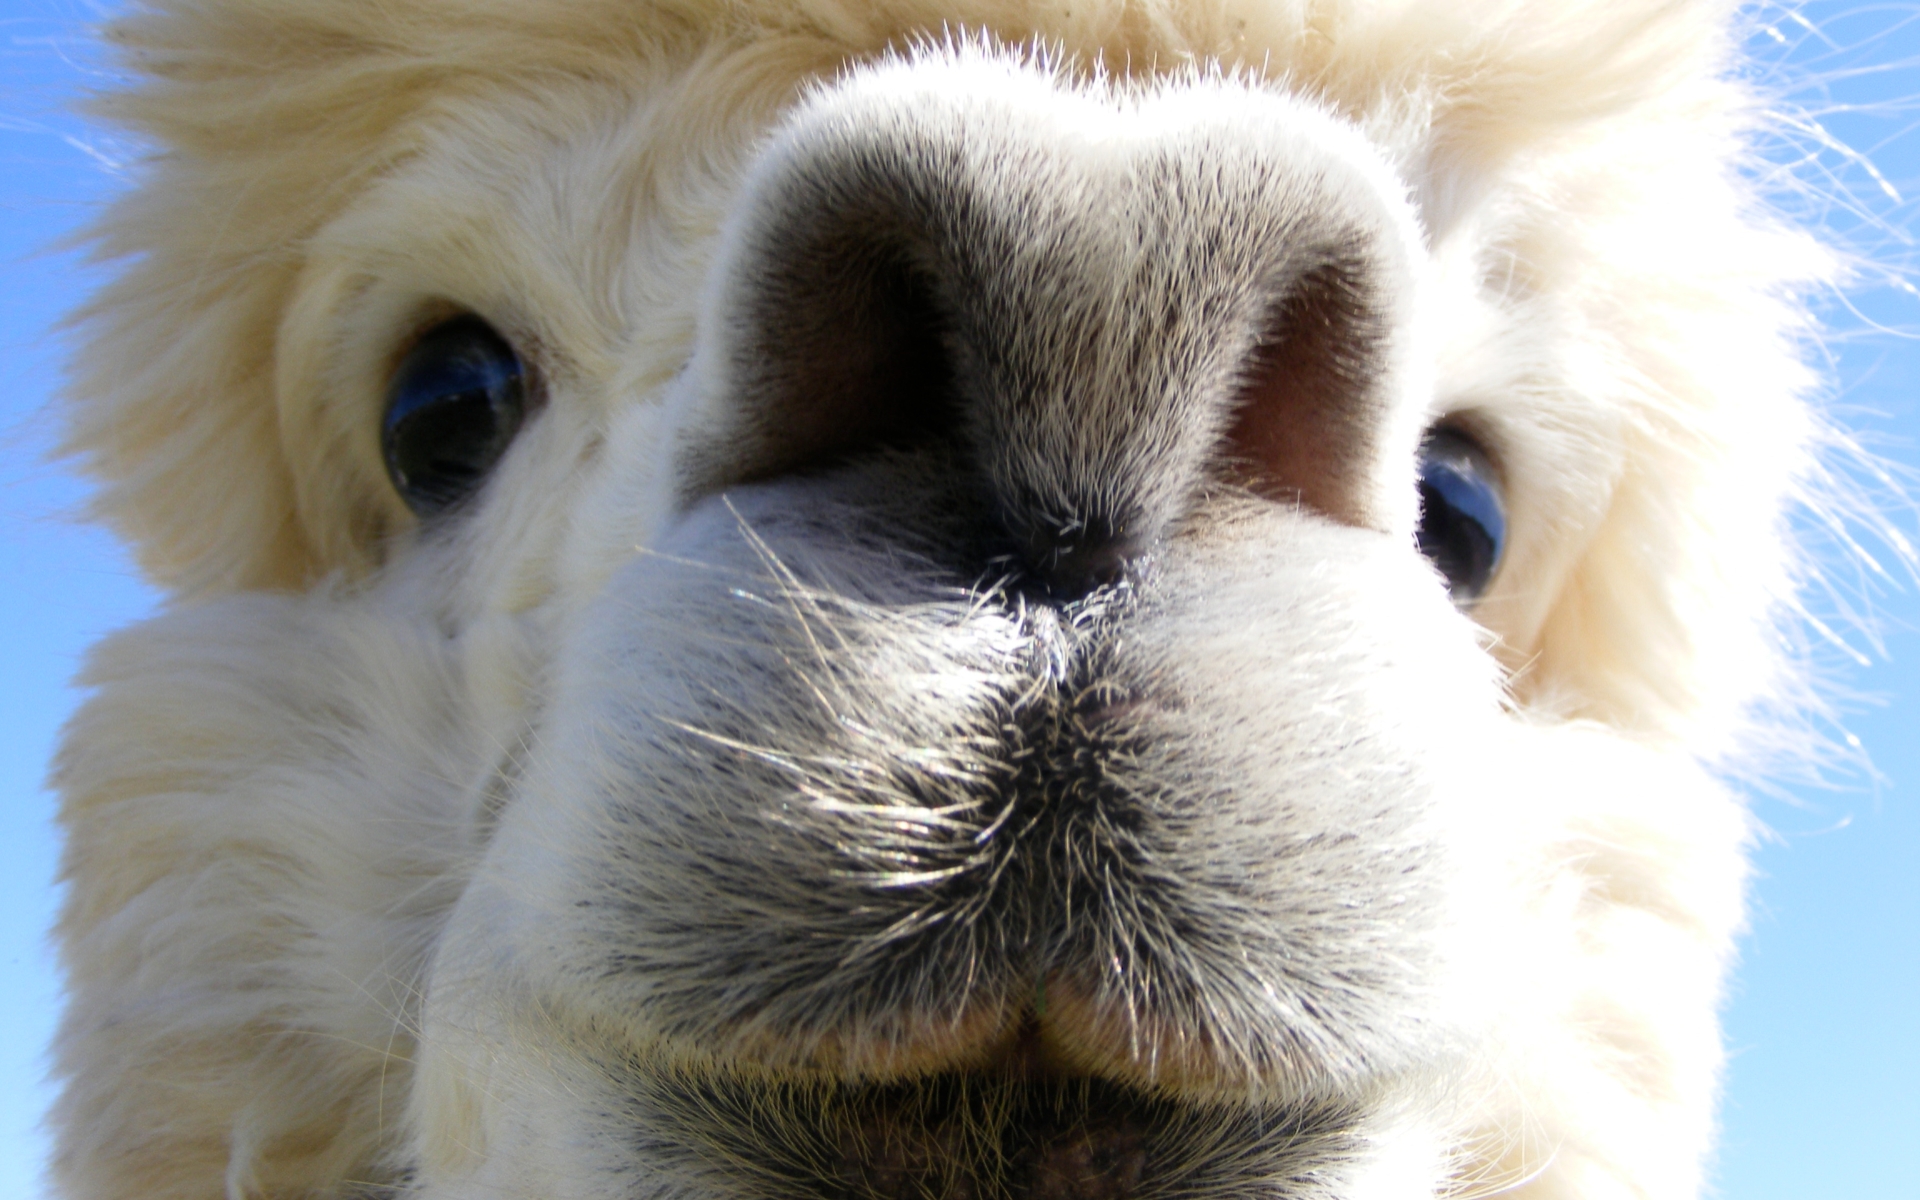 alpaca wallpaper,nose,snout,close up,fur,eye